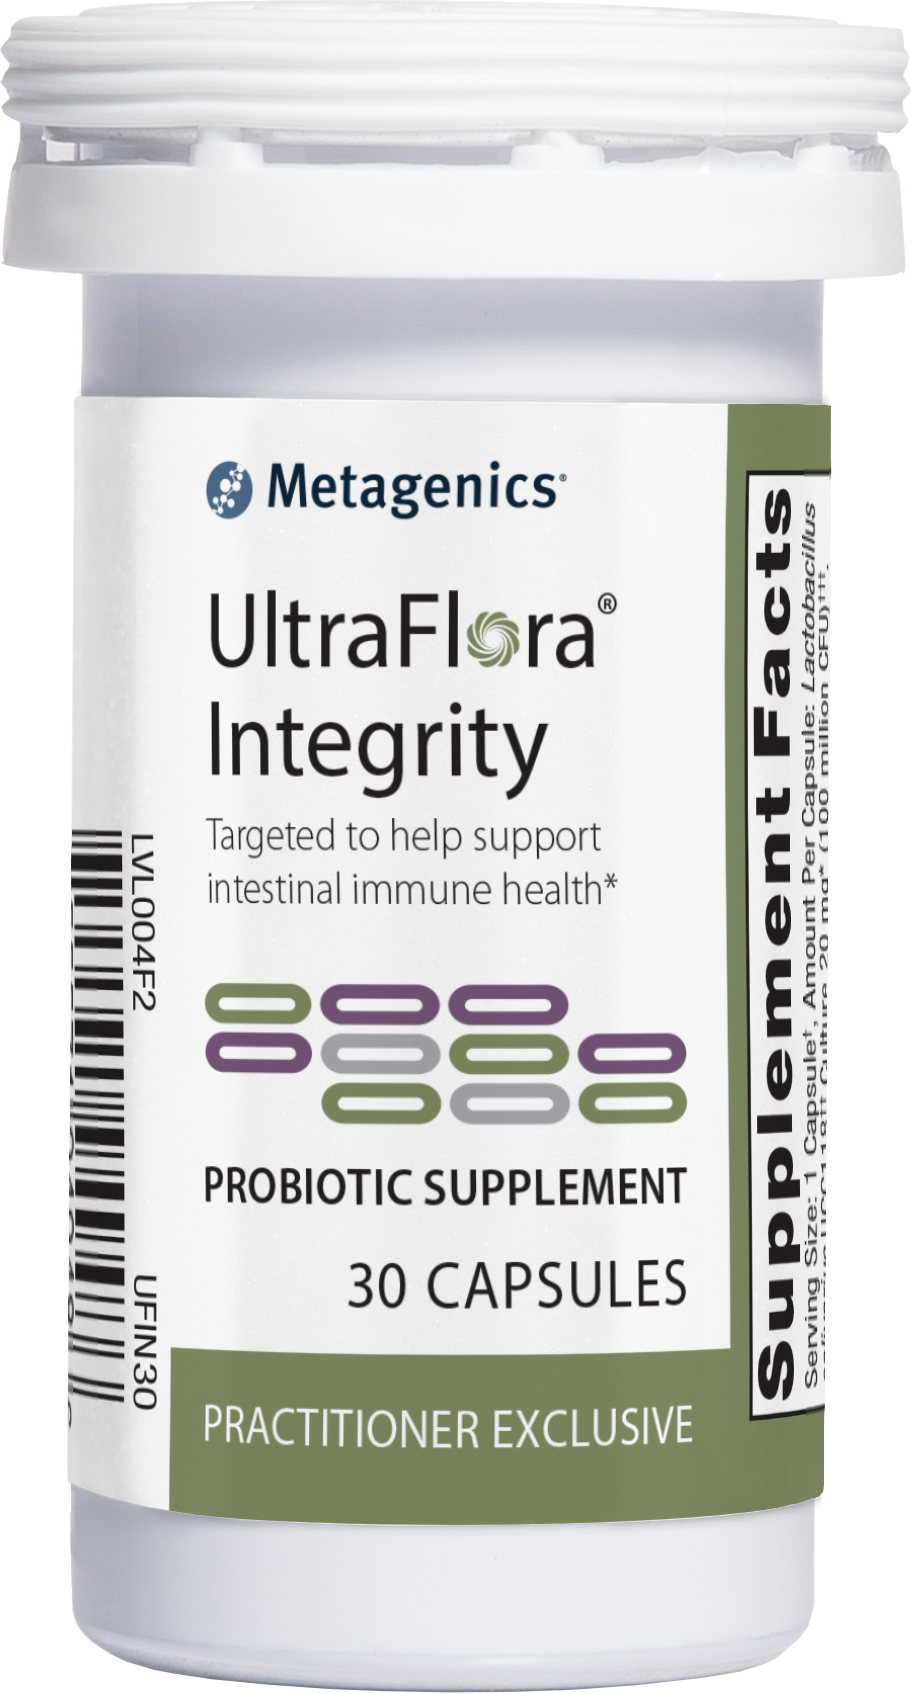 UltraFlora Integrity